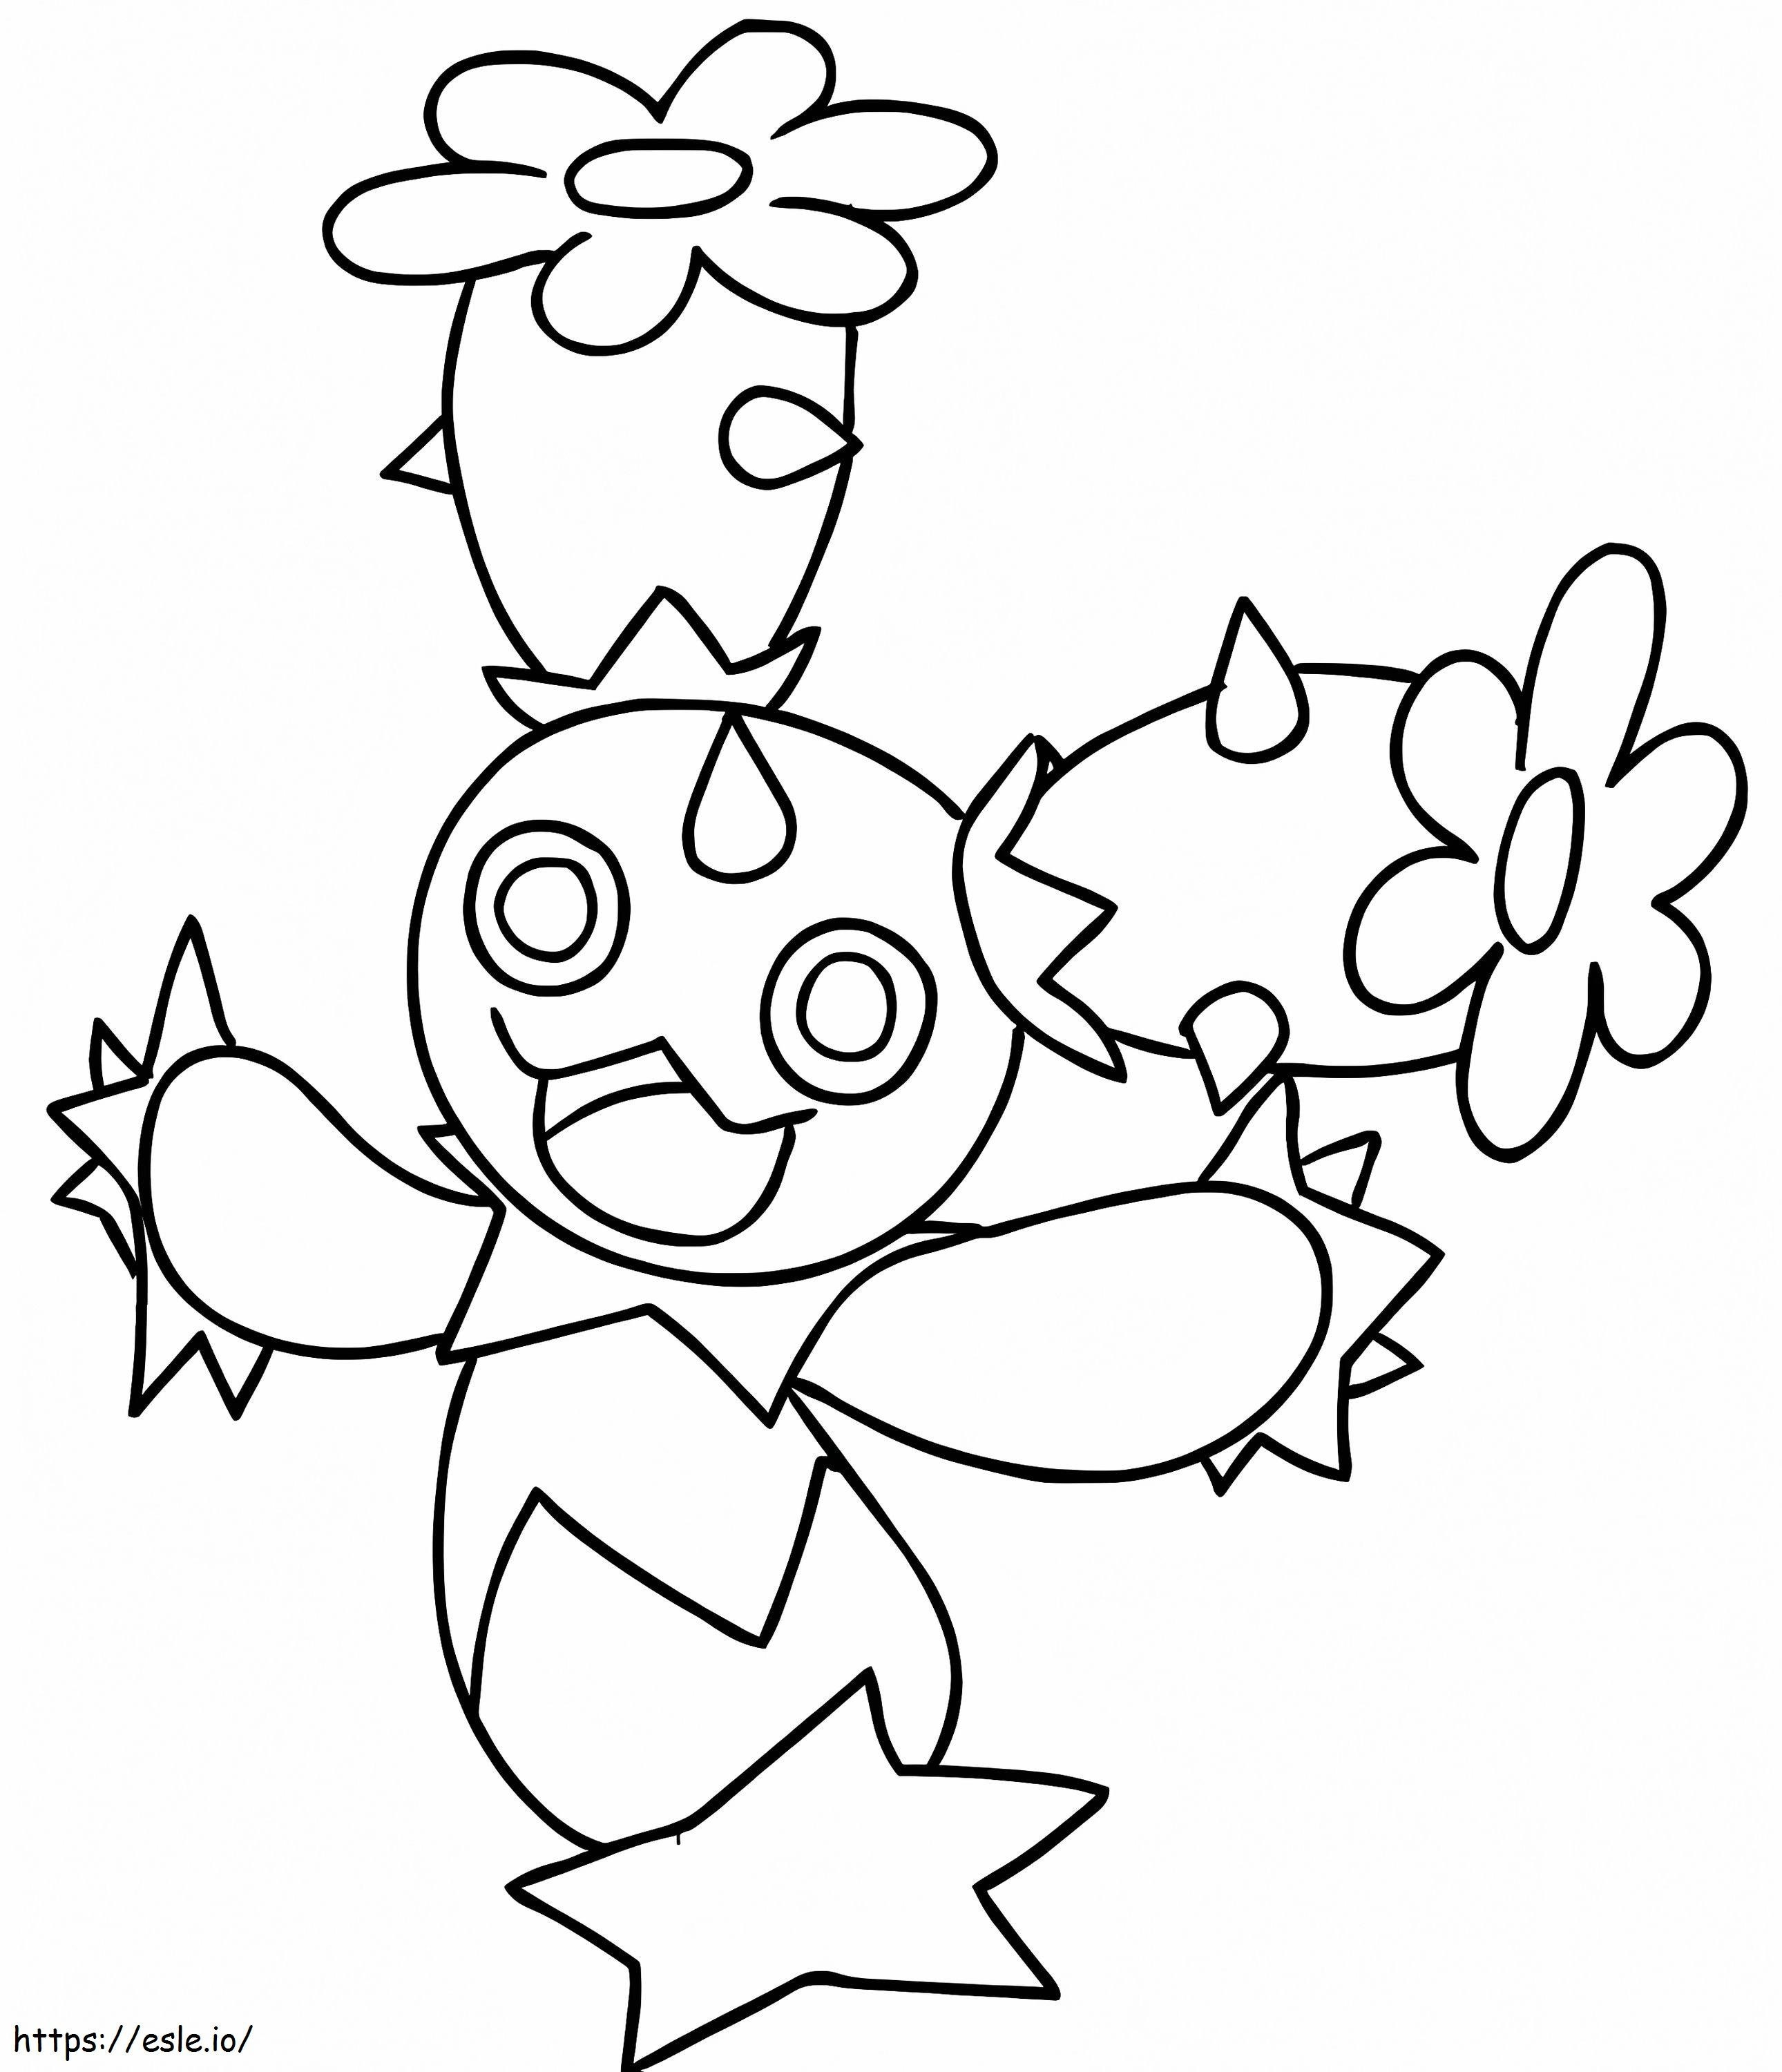 Maractus Pokemon 1 coloring page